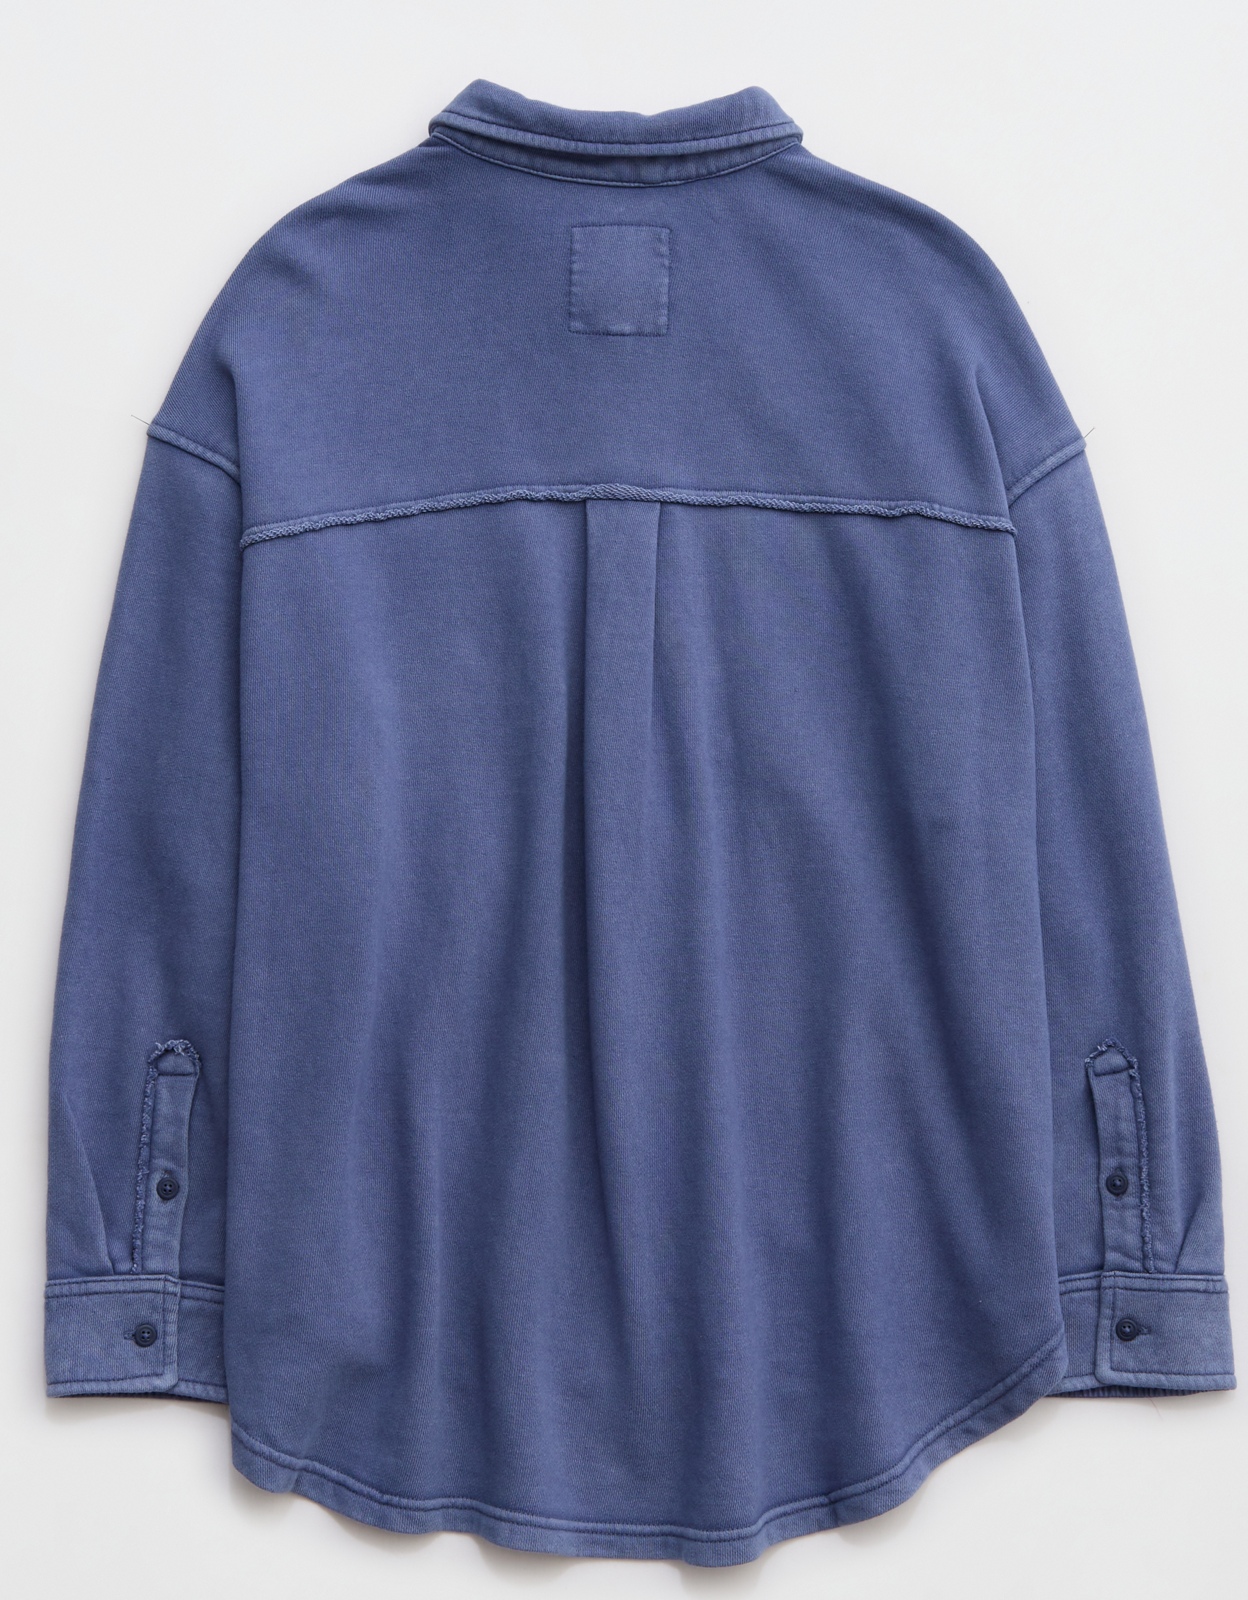 Aerie LumberJane Fleece Shirt curated on LTK